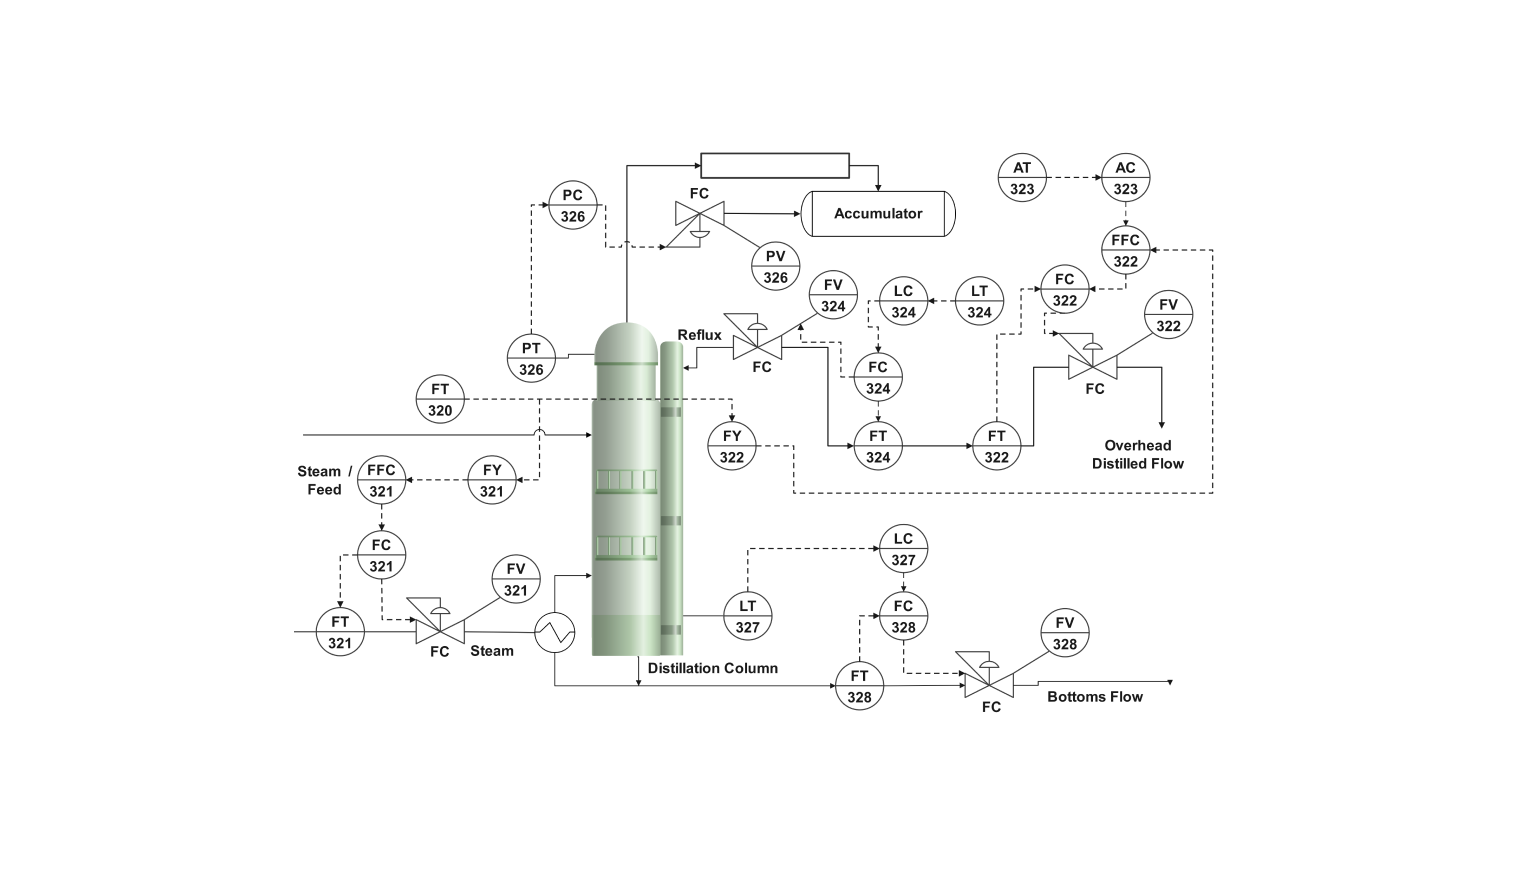 Distillation column P&ID diagram